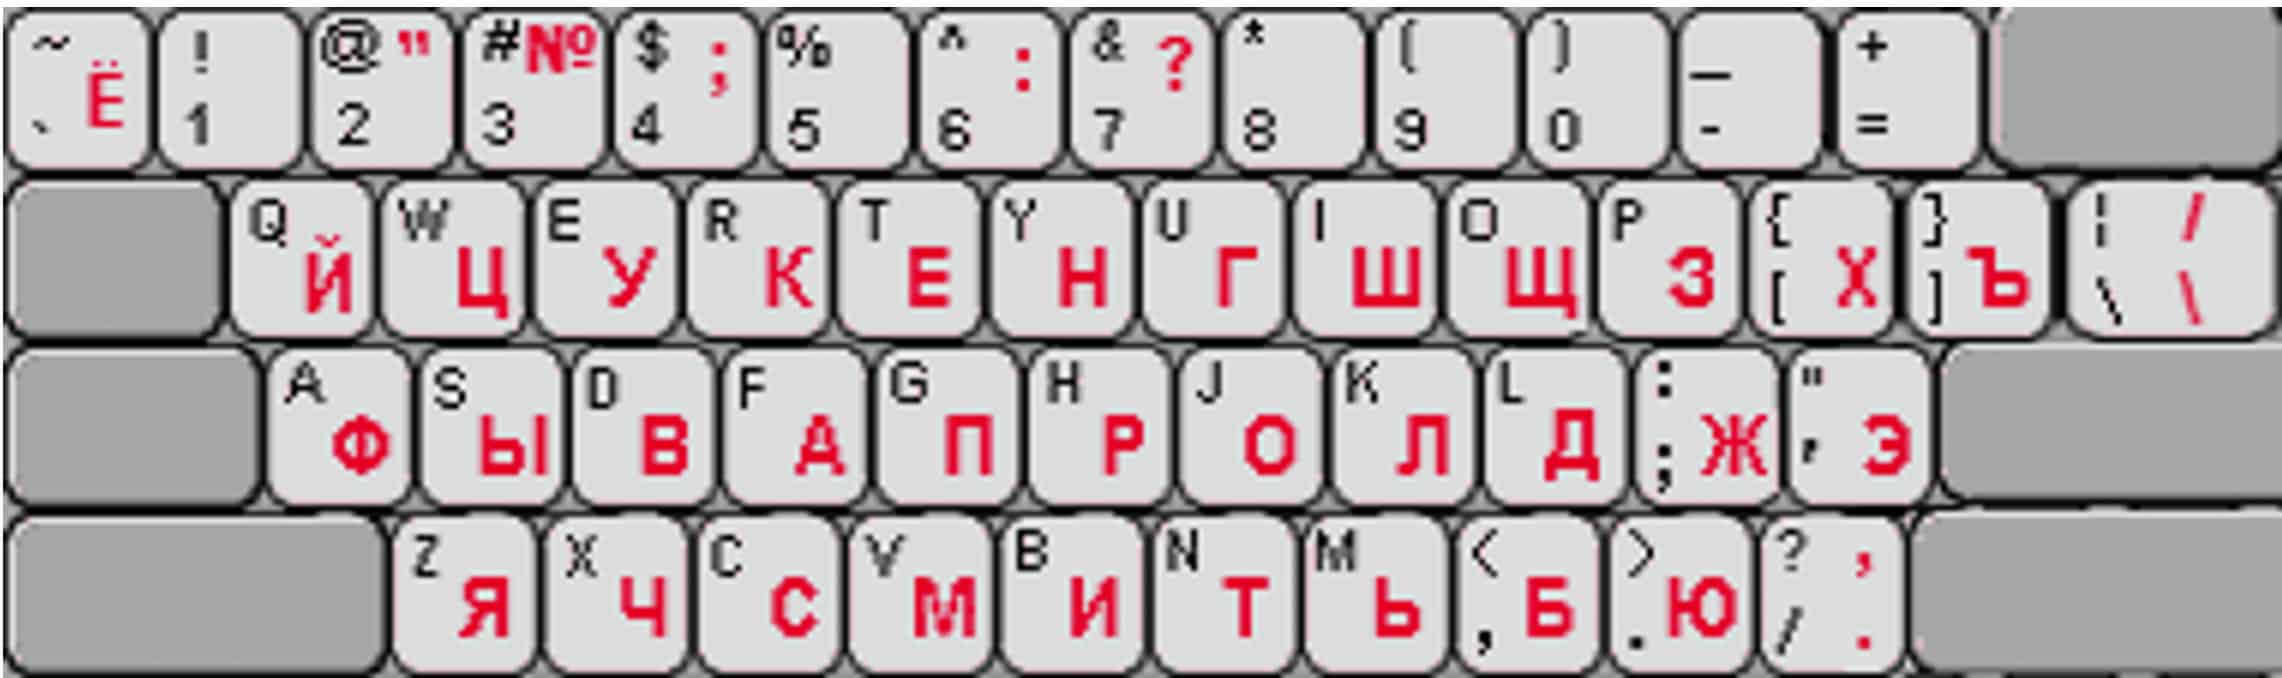 Russian keyboard image